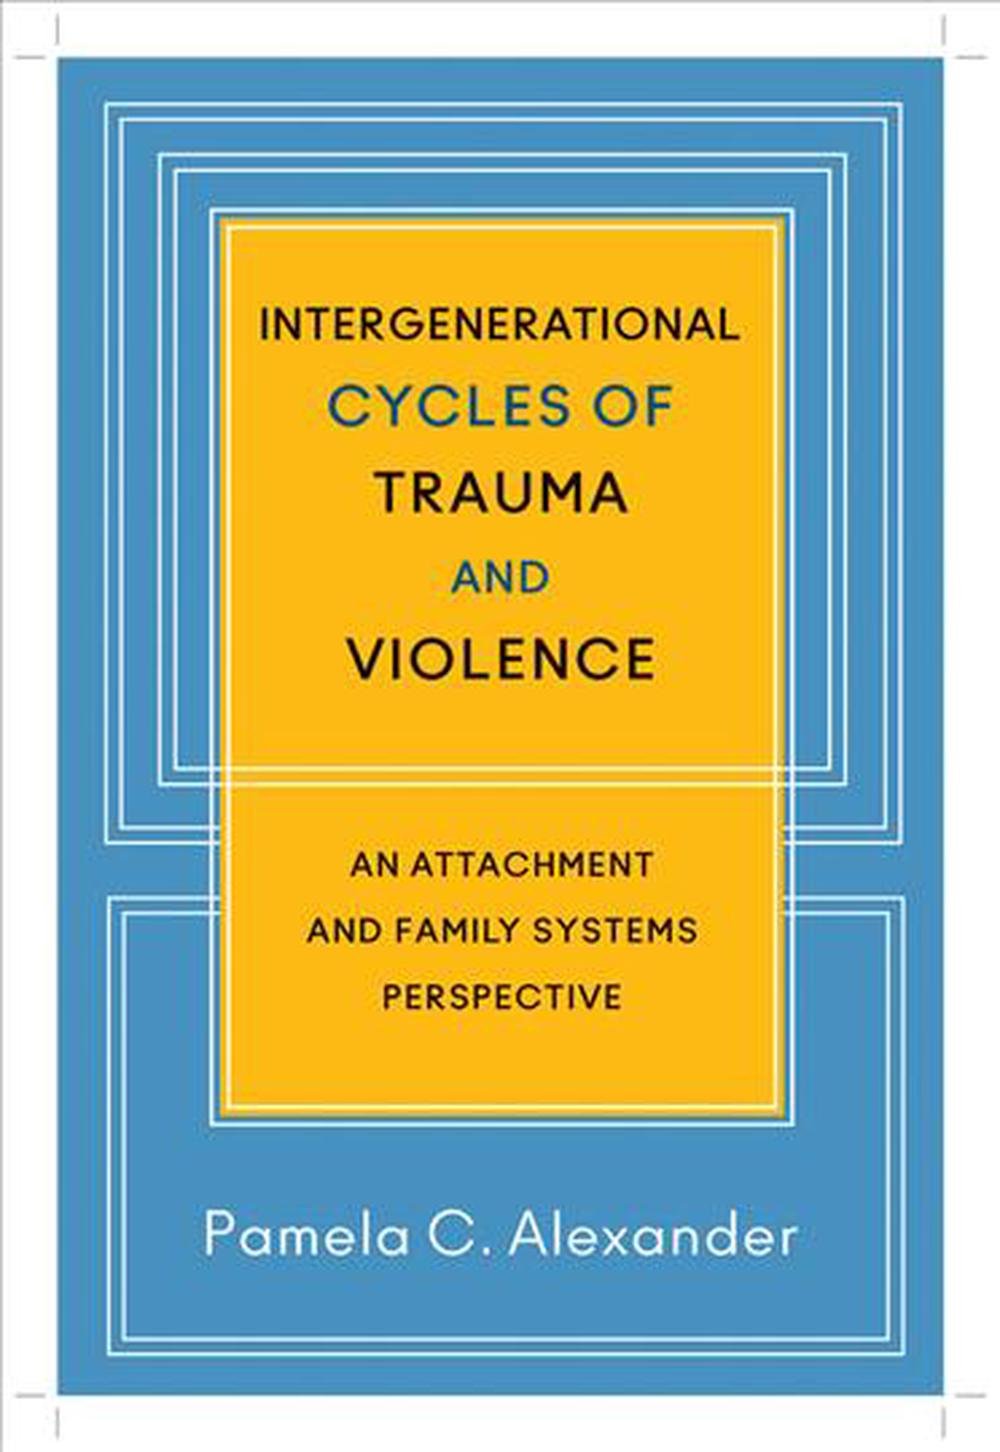 intergenerational trauma case study